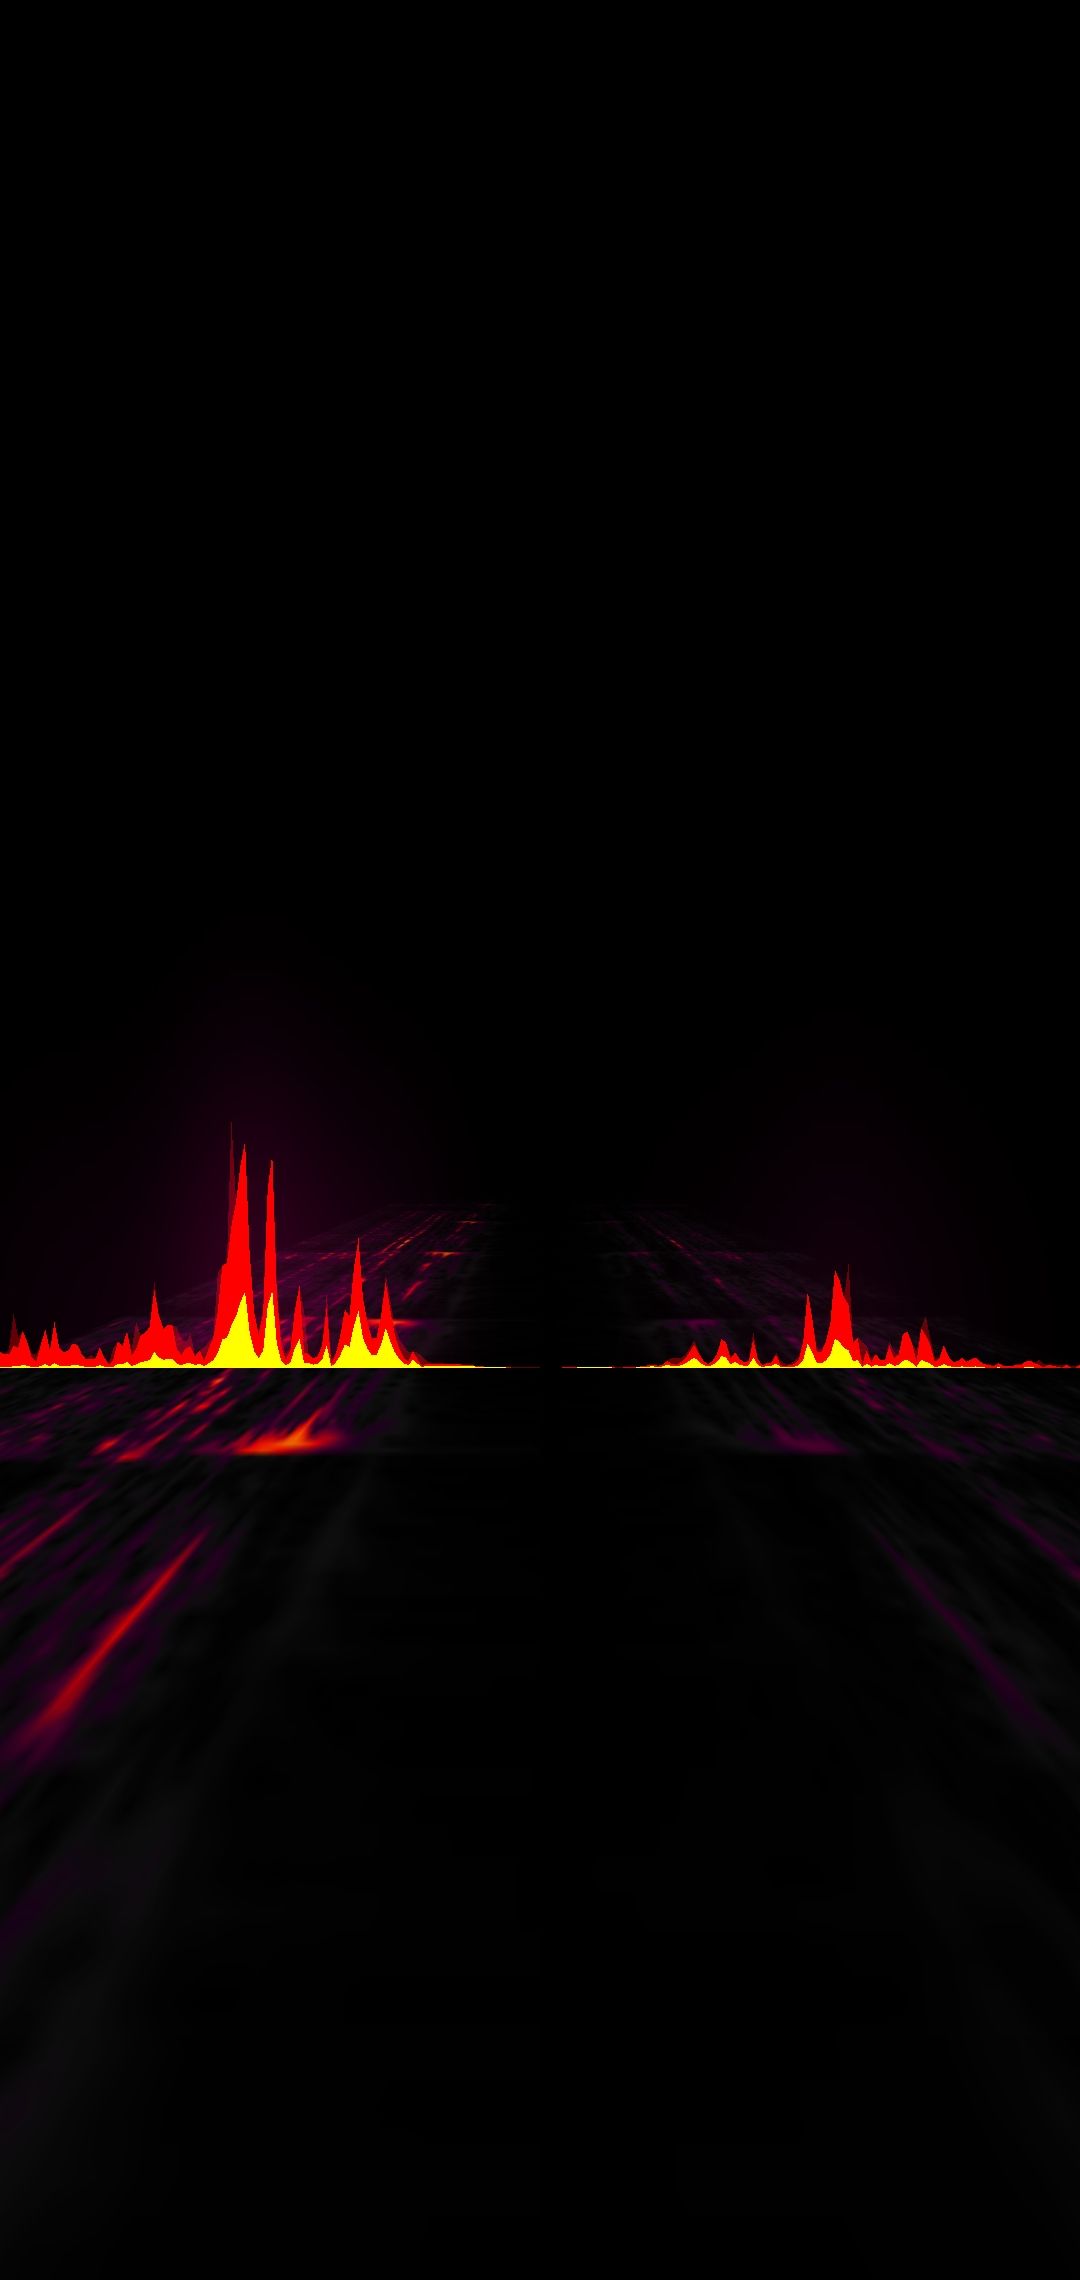 Spectrolizer's line visualizer looks like fire with a warm color scheme